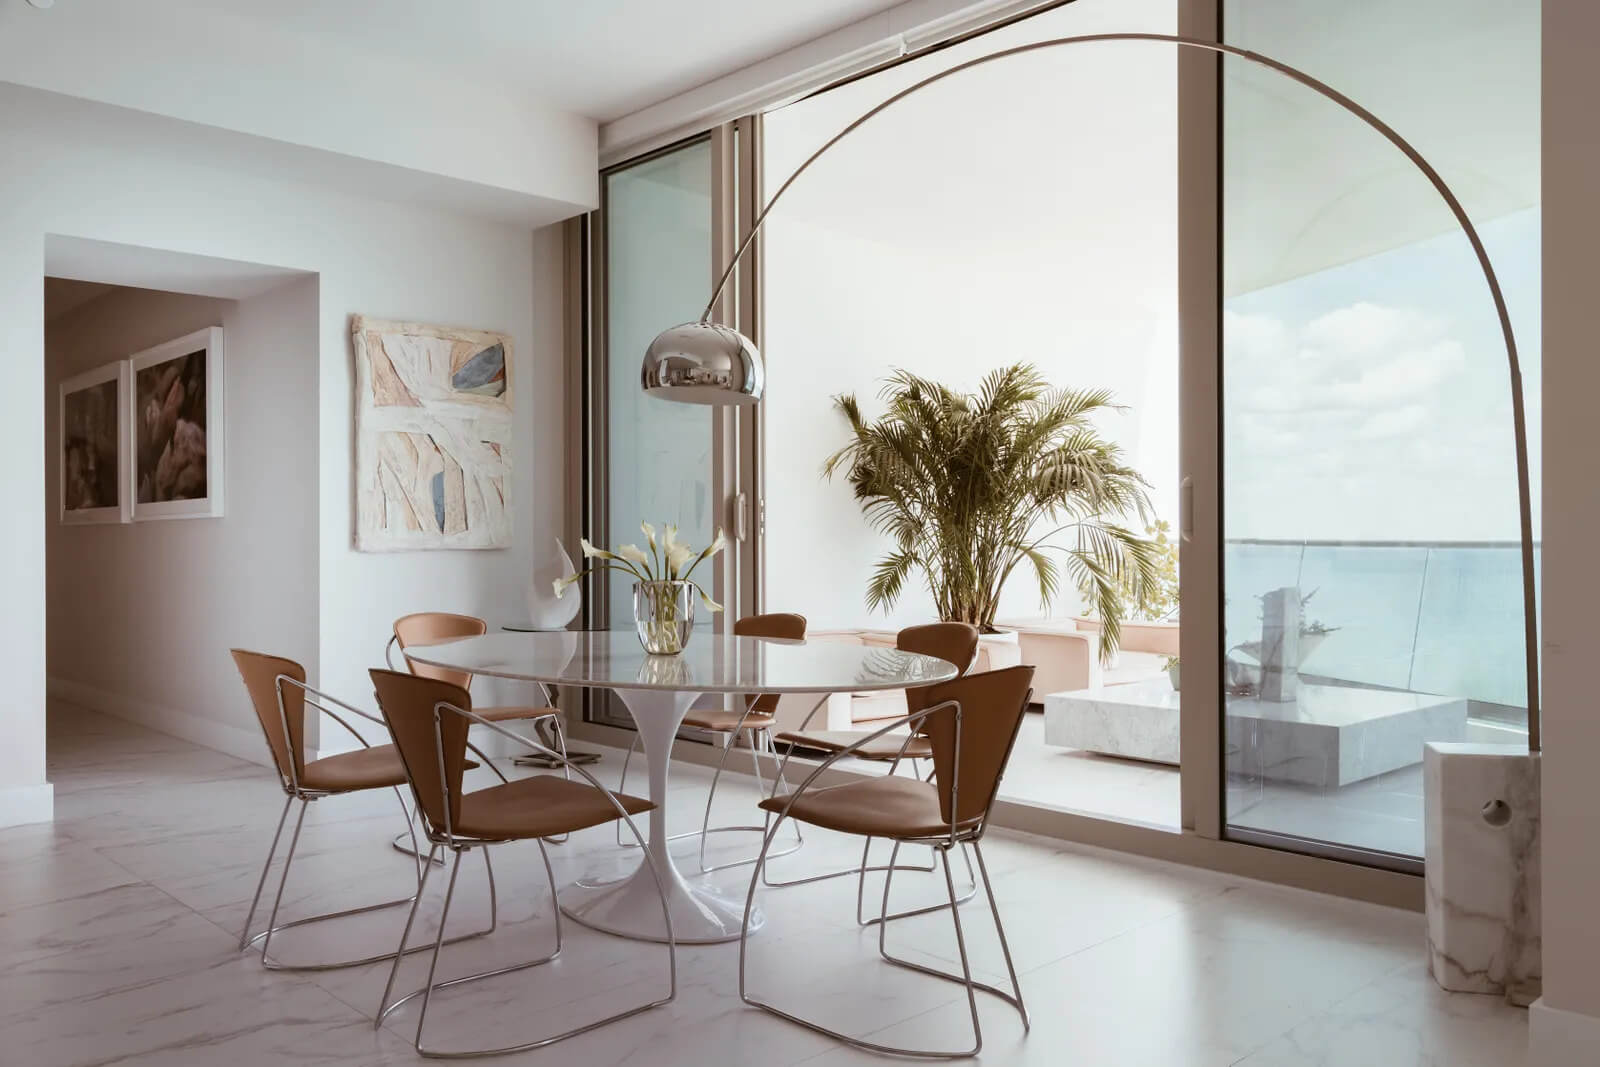 Miami Lana del Rey Apartment  designed by the interior designer Tiffany Howell